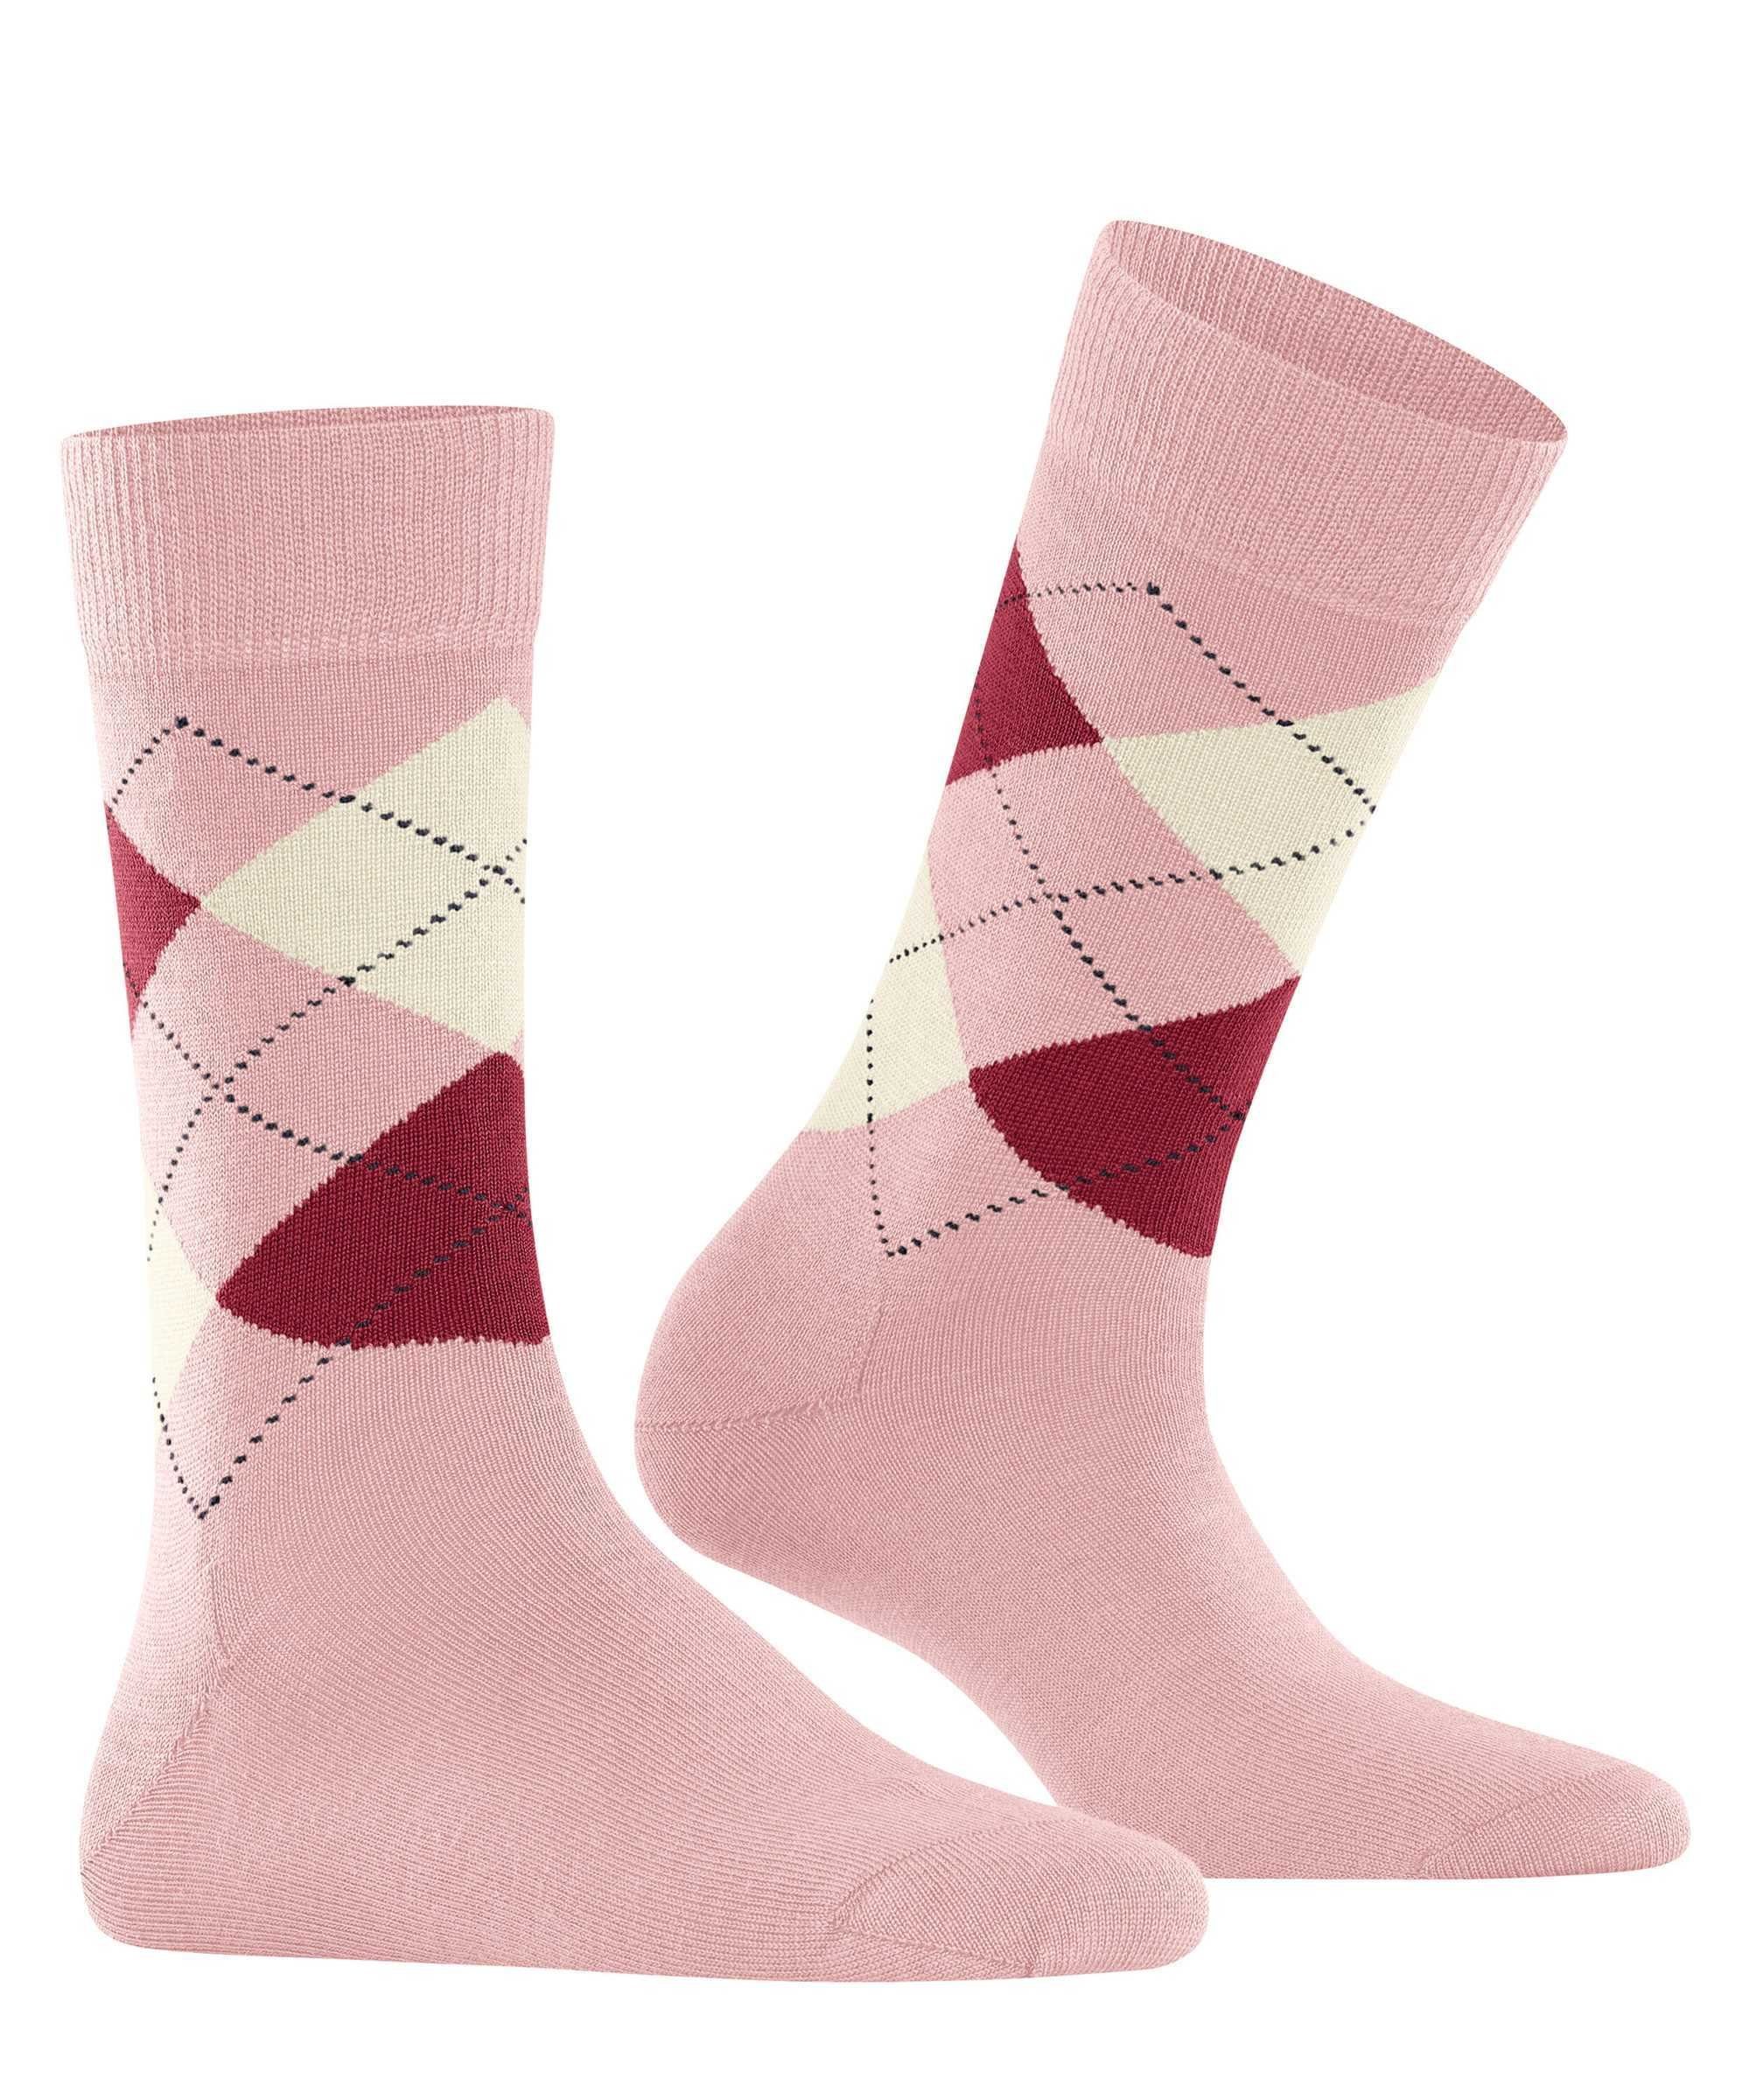 Kurzstrumpf Damen Socken Burlington - Kurzsocken Rosa/Rot/Weiß MARYLEBONE